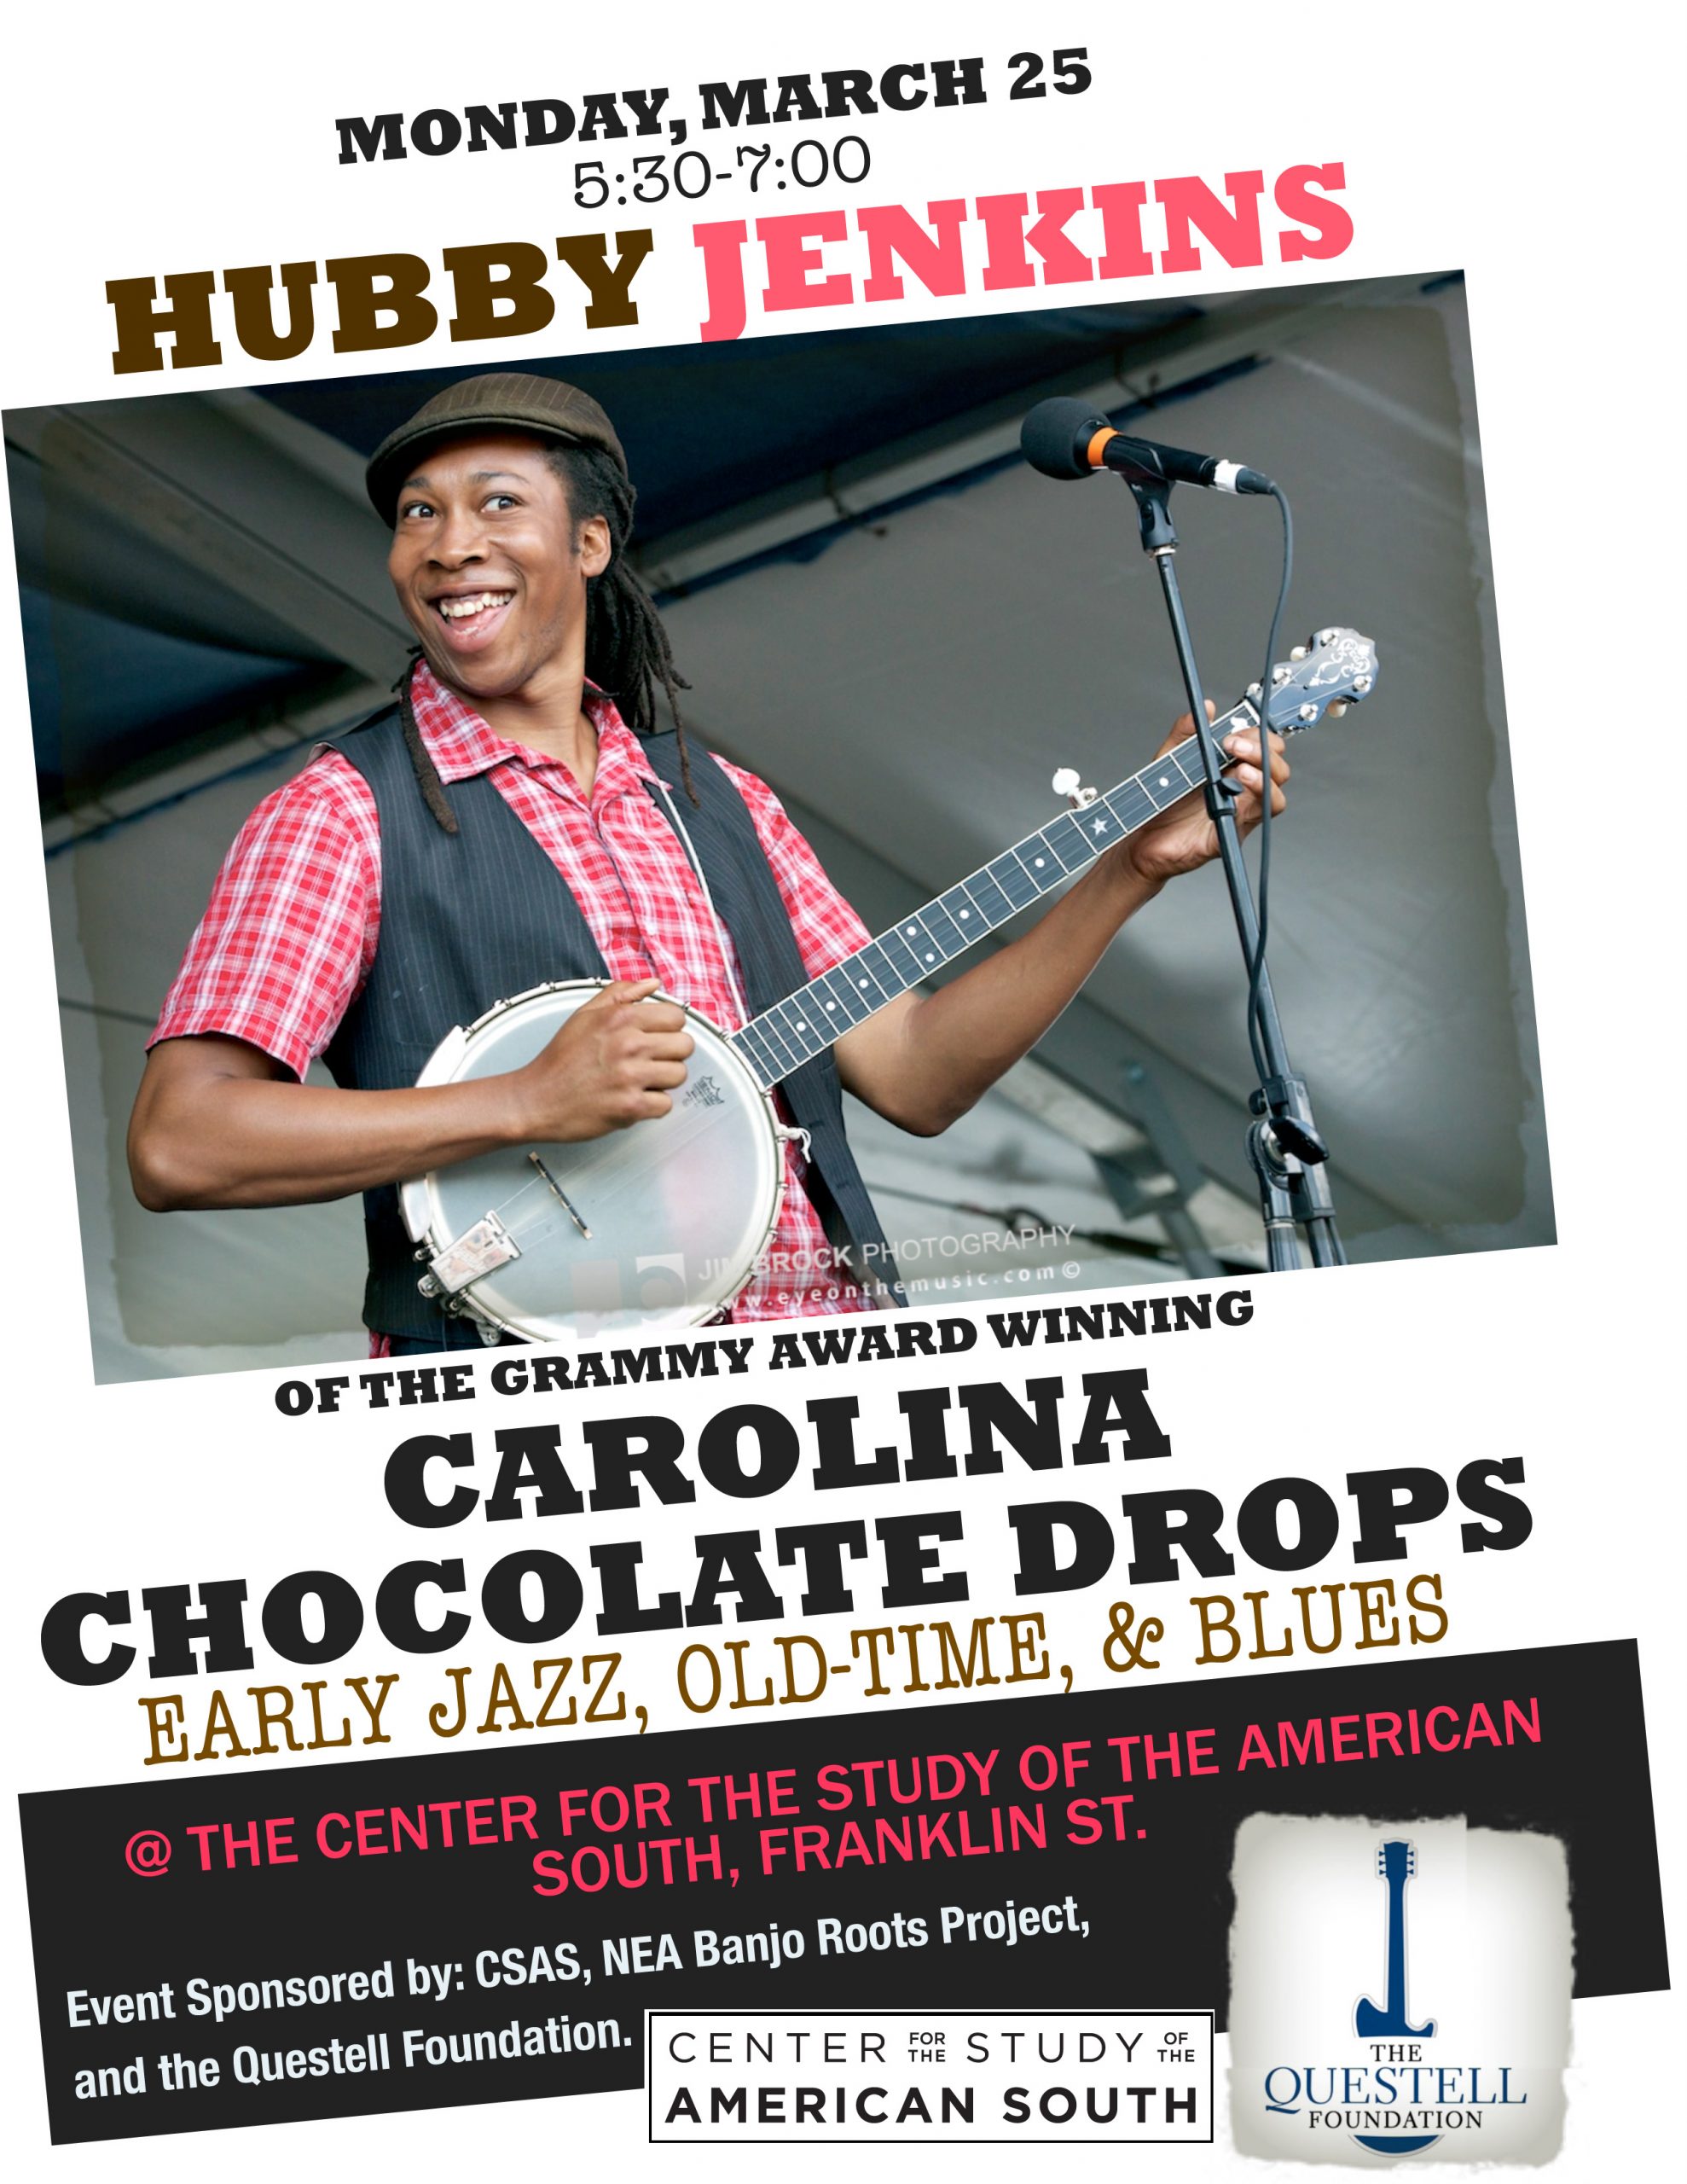 Hubby Jenkins of the Carolina Chocolate Drops, with banjo